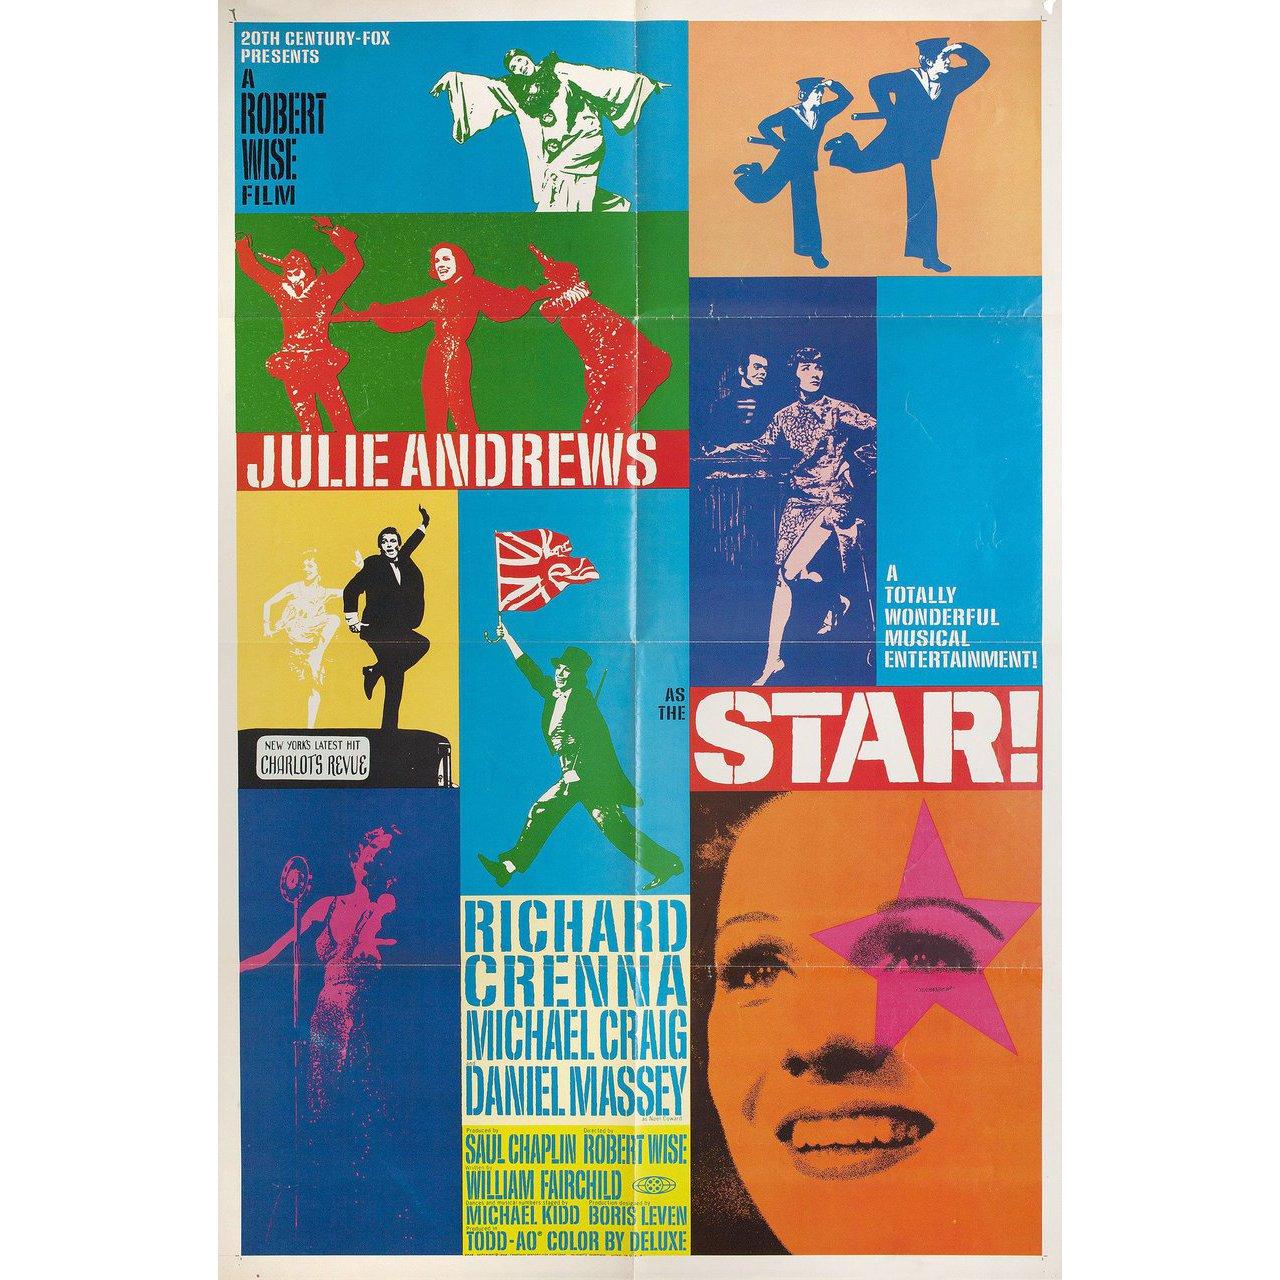 American Star! 1968 U.S. One Sheet Film Poster